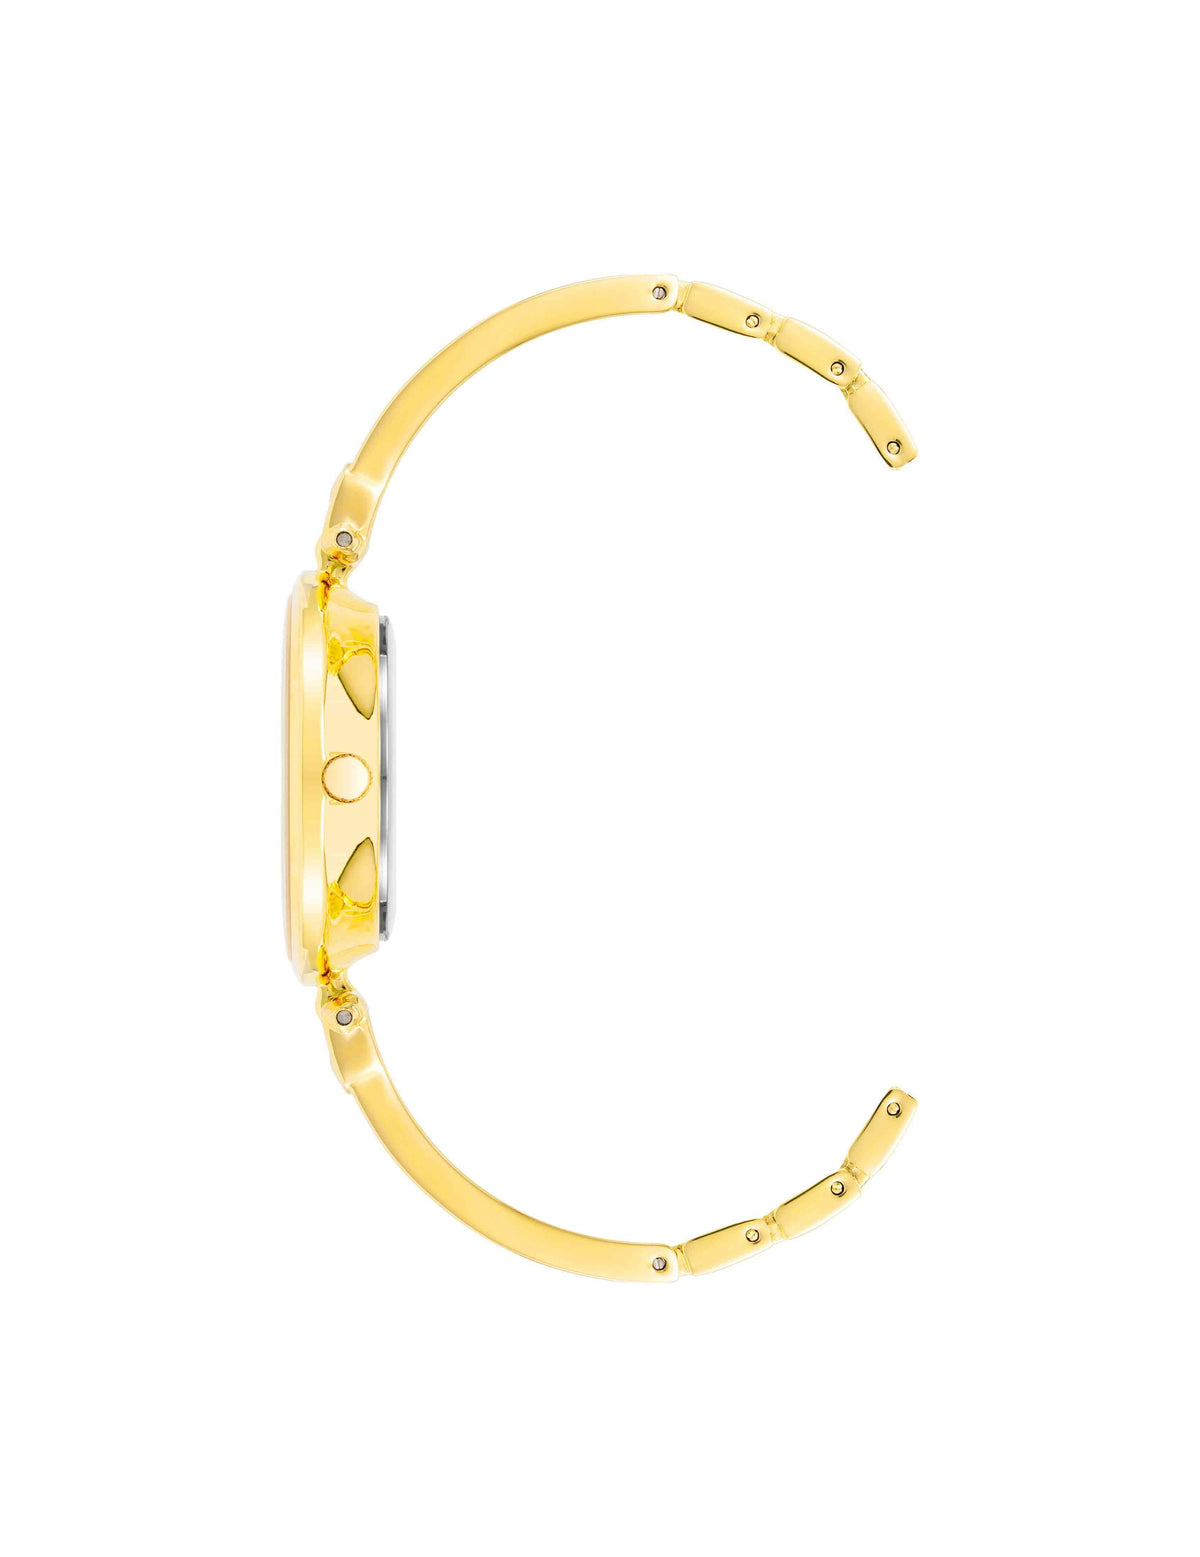 Anne Klein  Diamond Accented Bangle Bracelet Watch